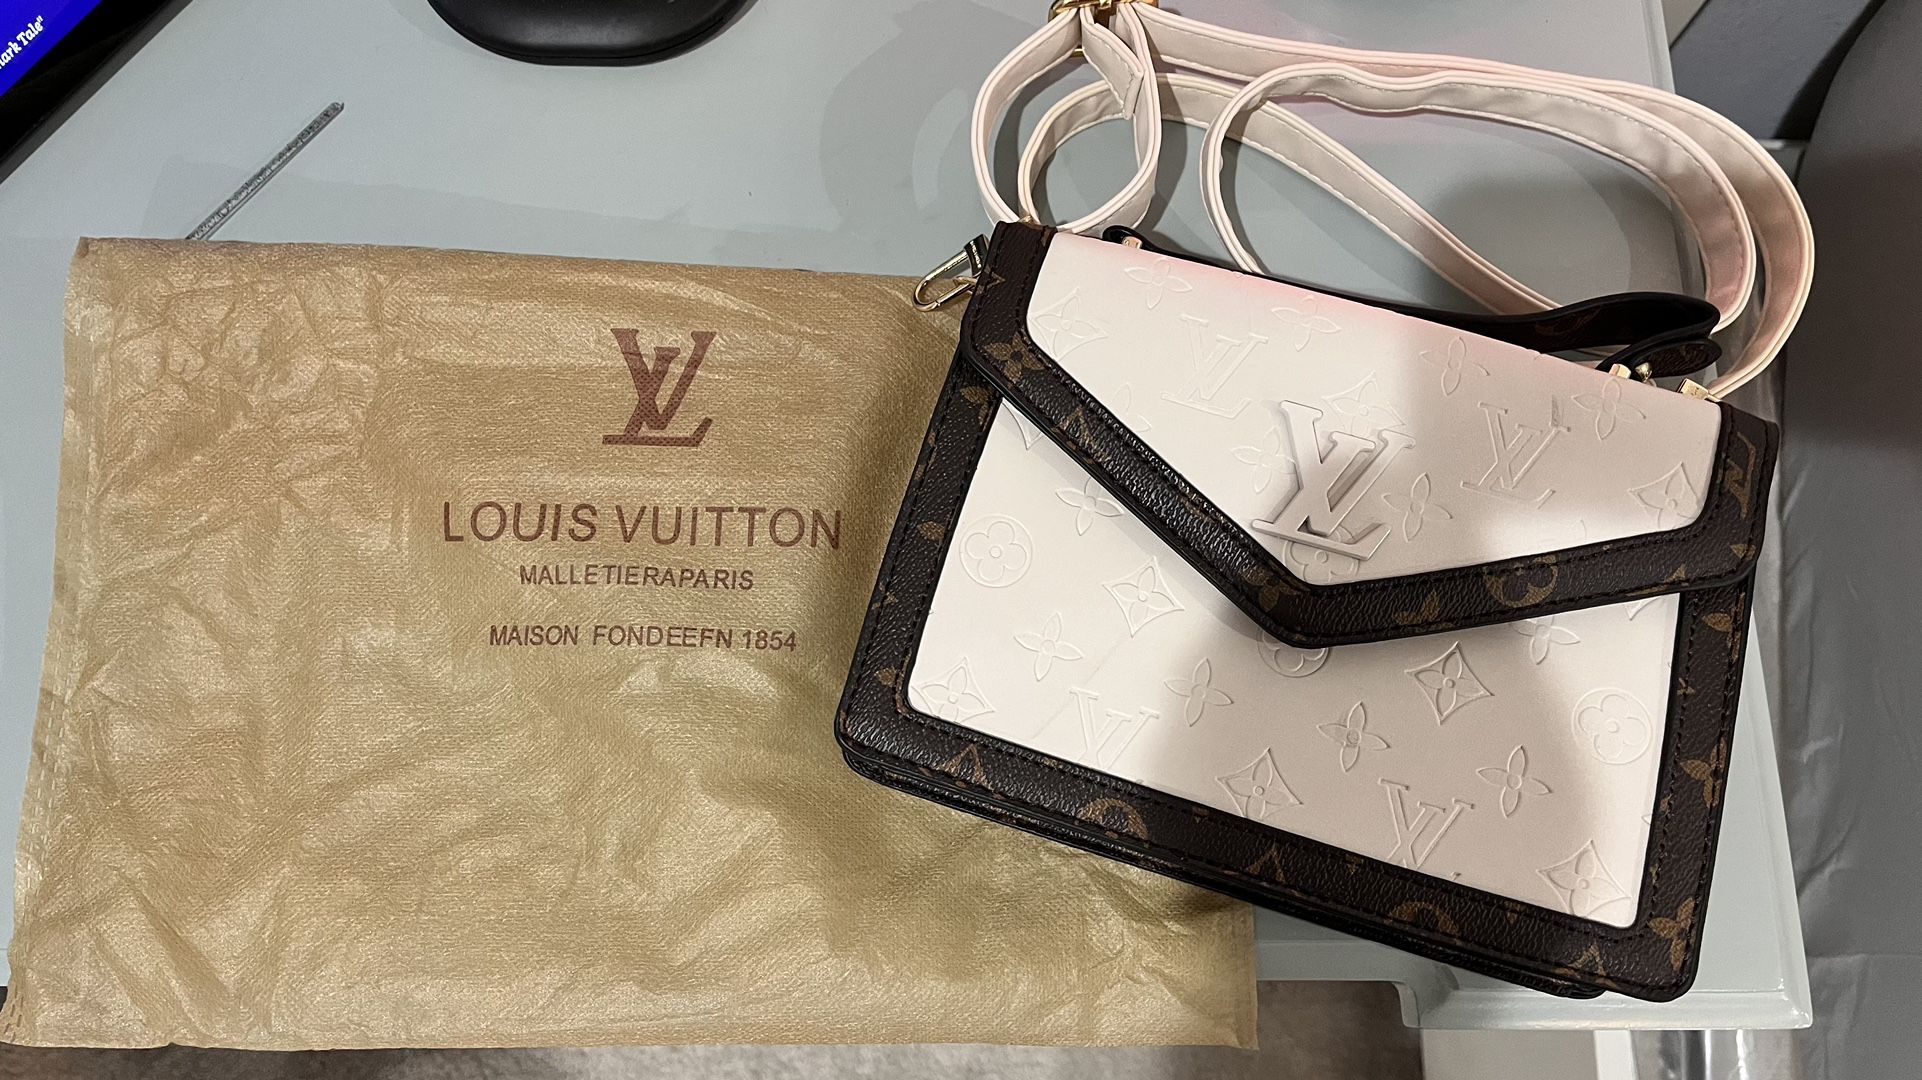 Louis Vuitton Purse for Sale in Wesley Chapel, FL - OfferUp